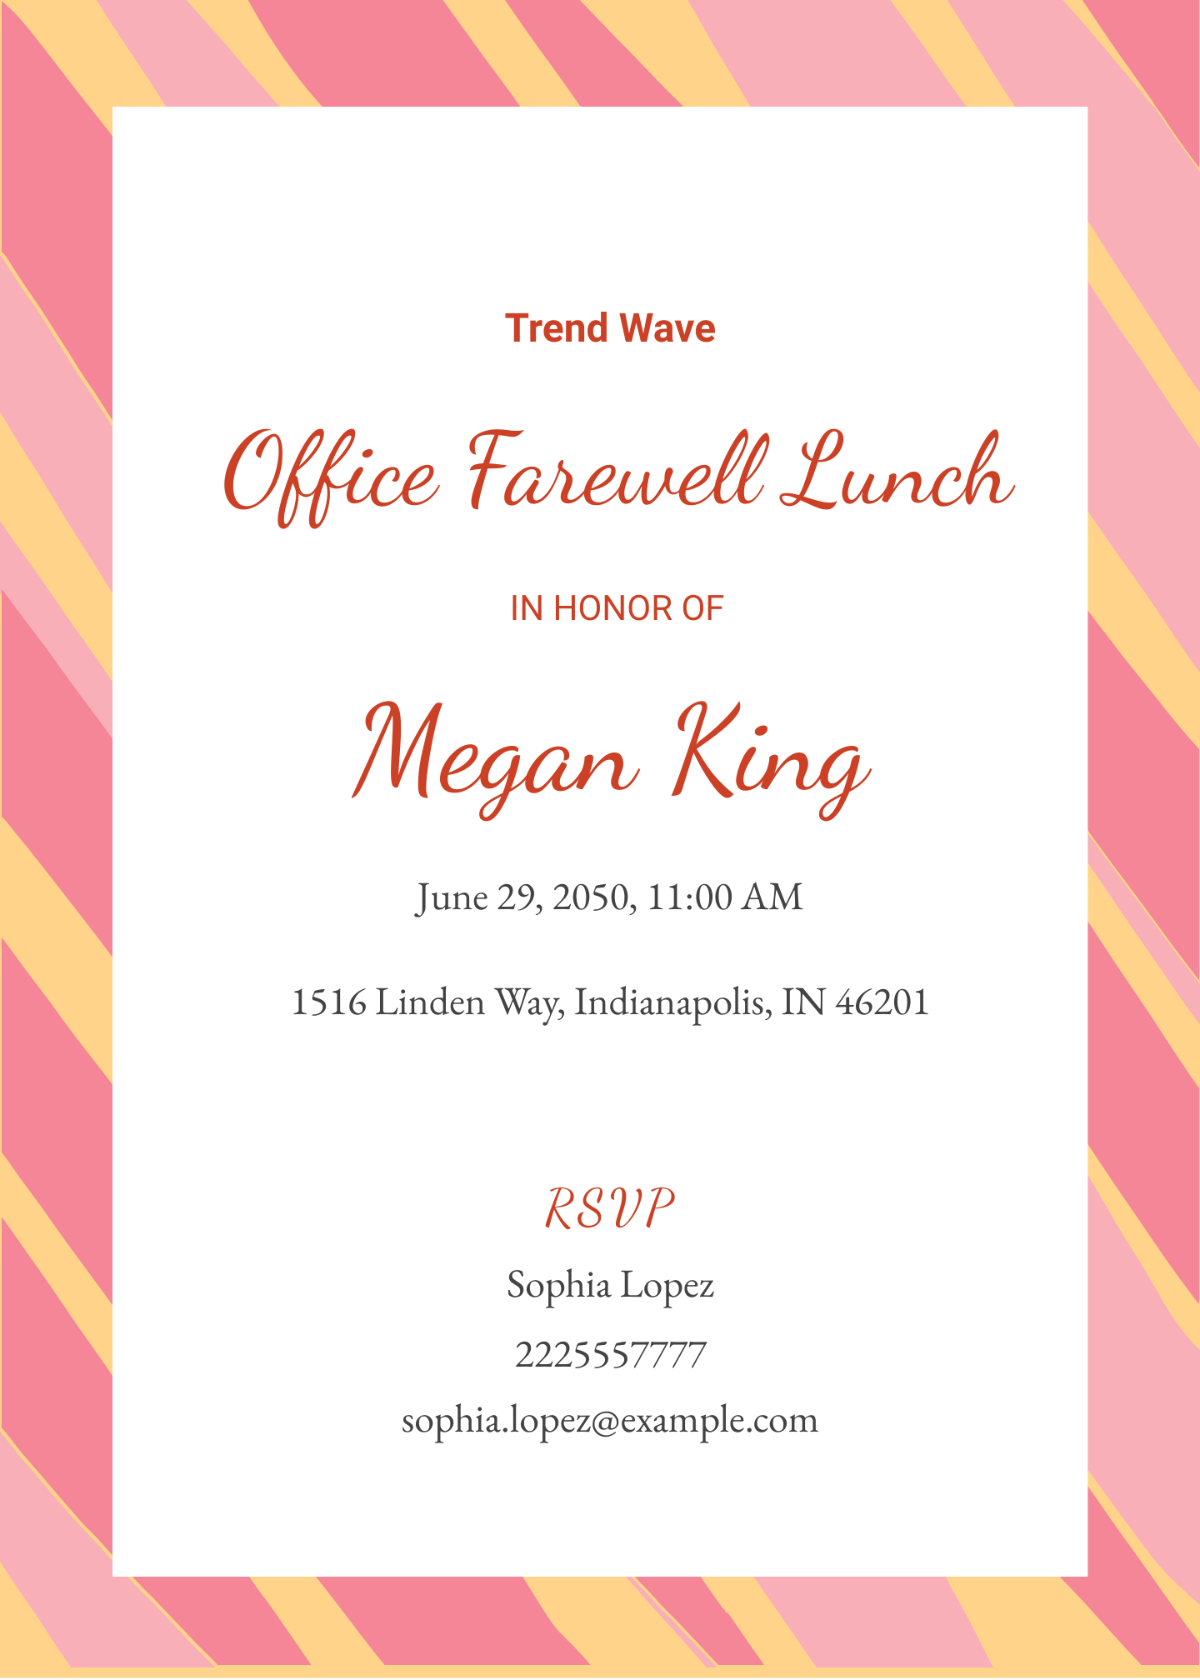 Office Farewell Lunch Invitation